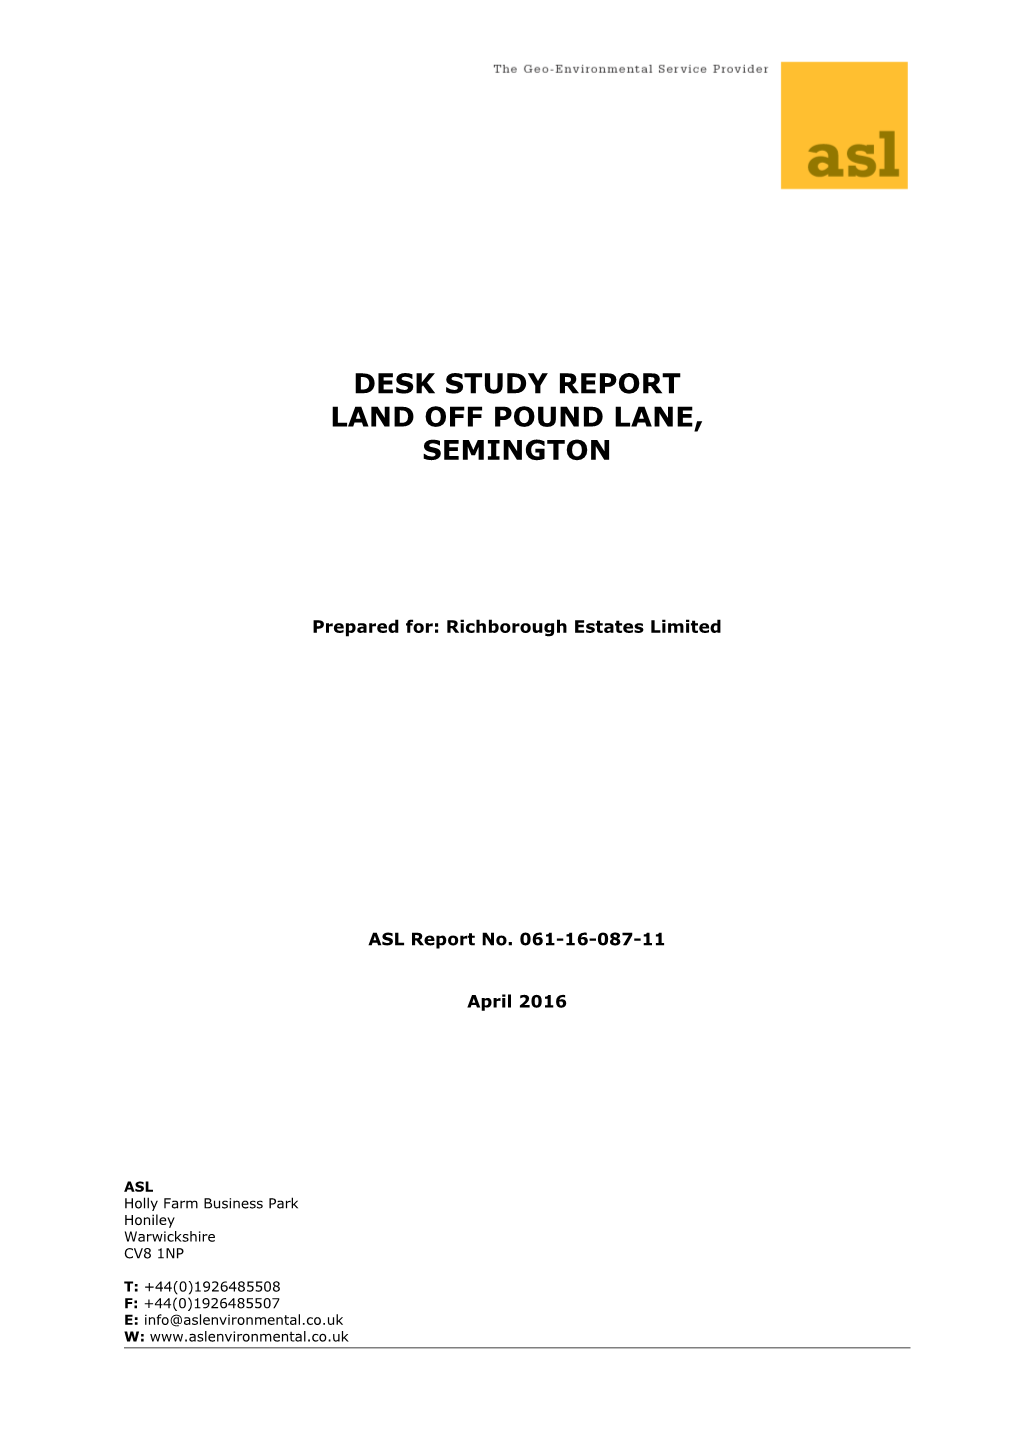 Desk Study Report Land Off Pound Lane, Semington